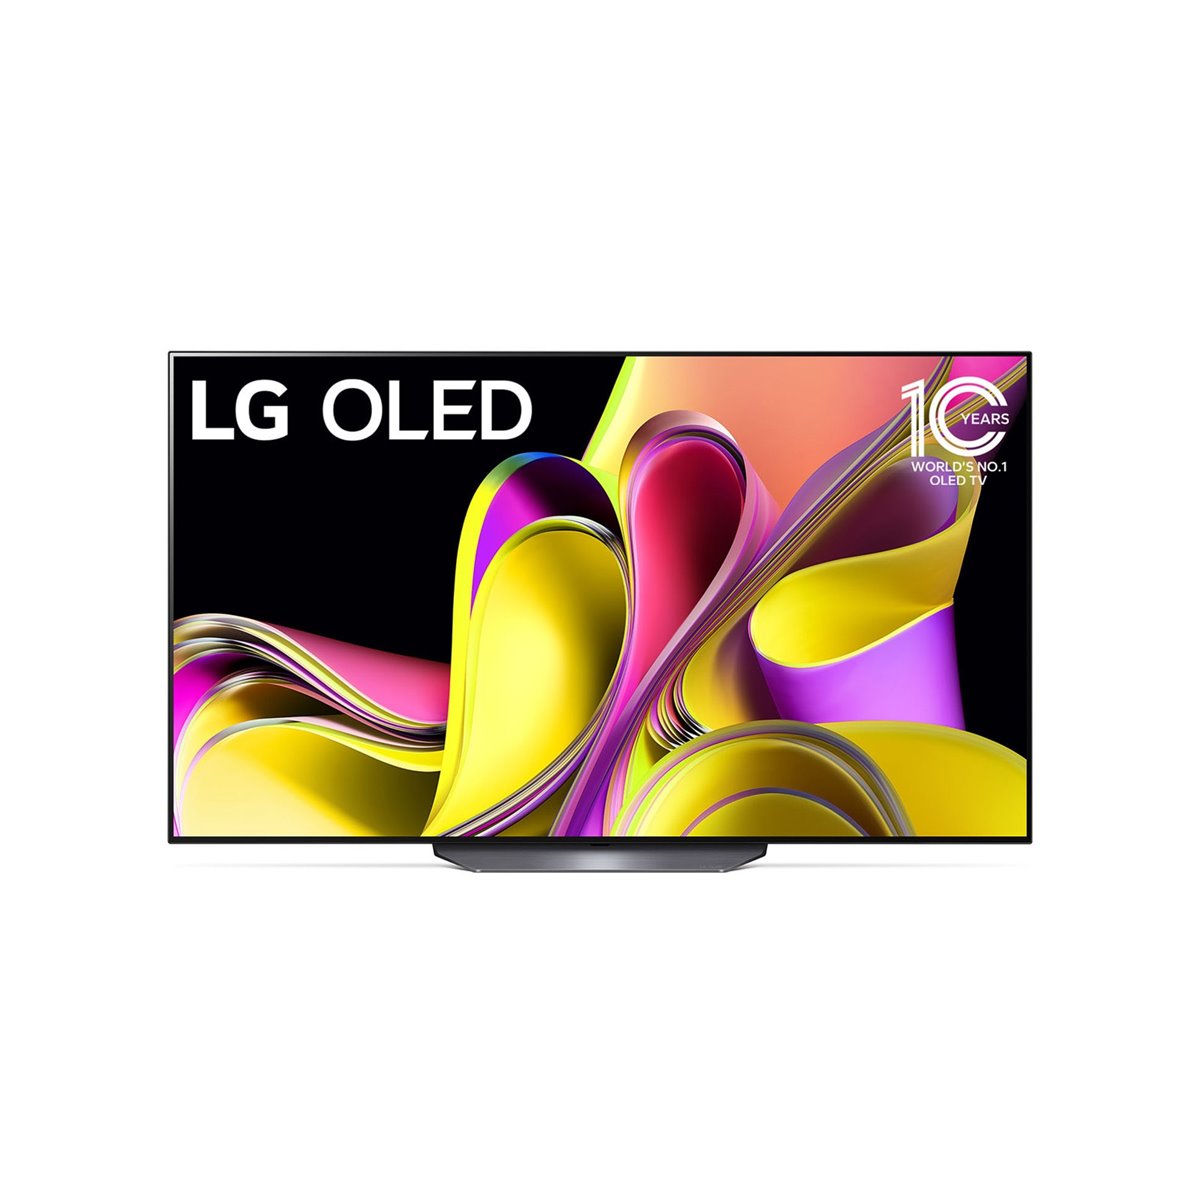 LG TV Set|LG|65|OLED-4K-Smart|3840x2160|Wireless - 164 cm - 65